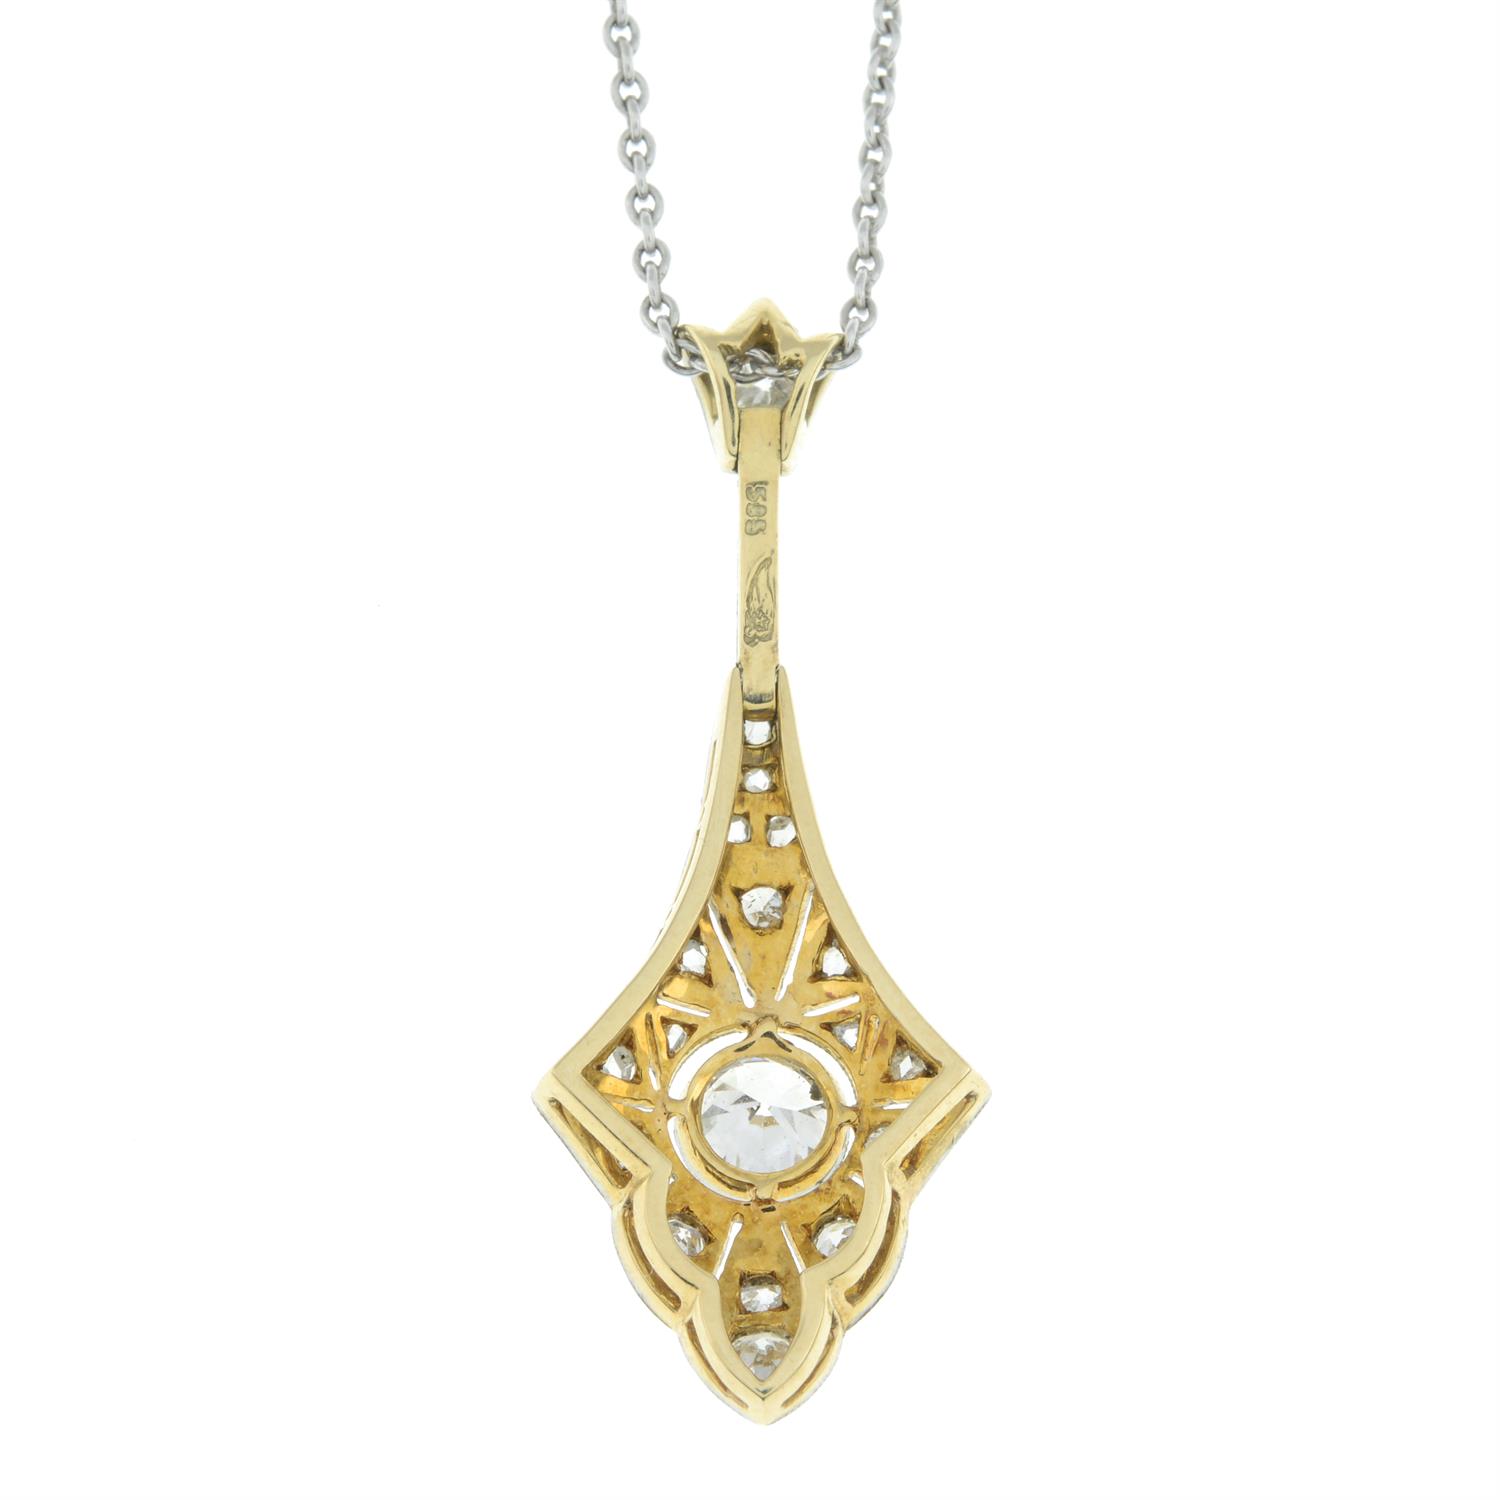 Diamond pendant, on chain - Image 4 of 6